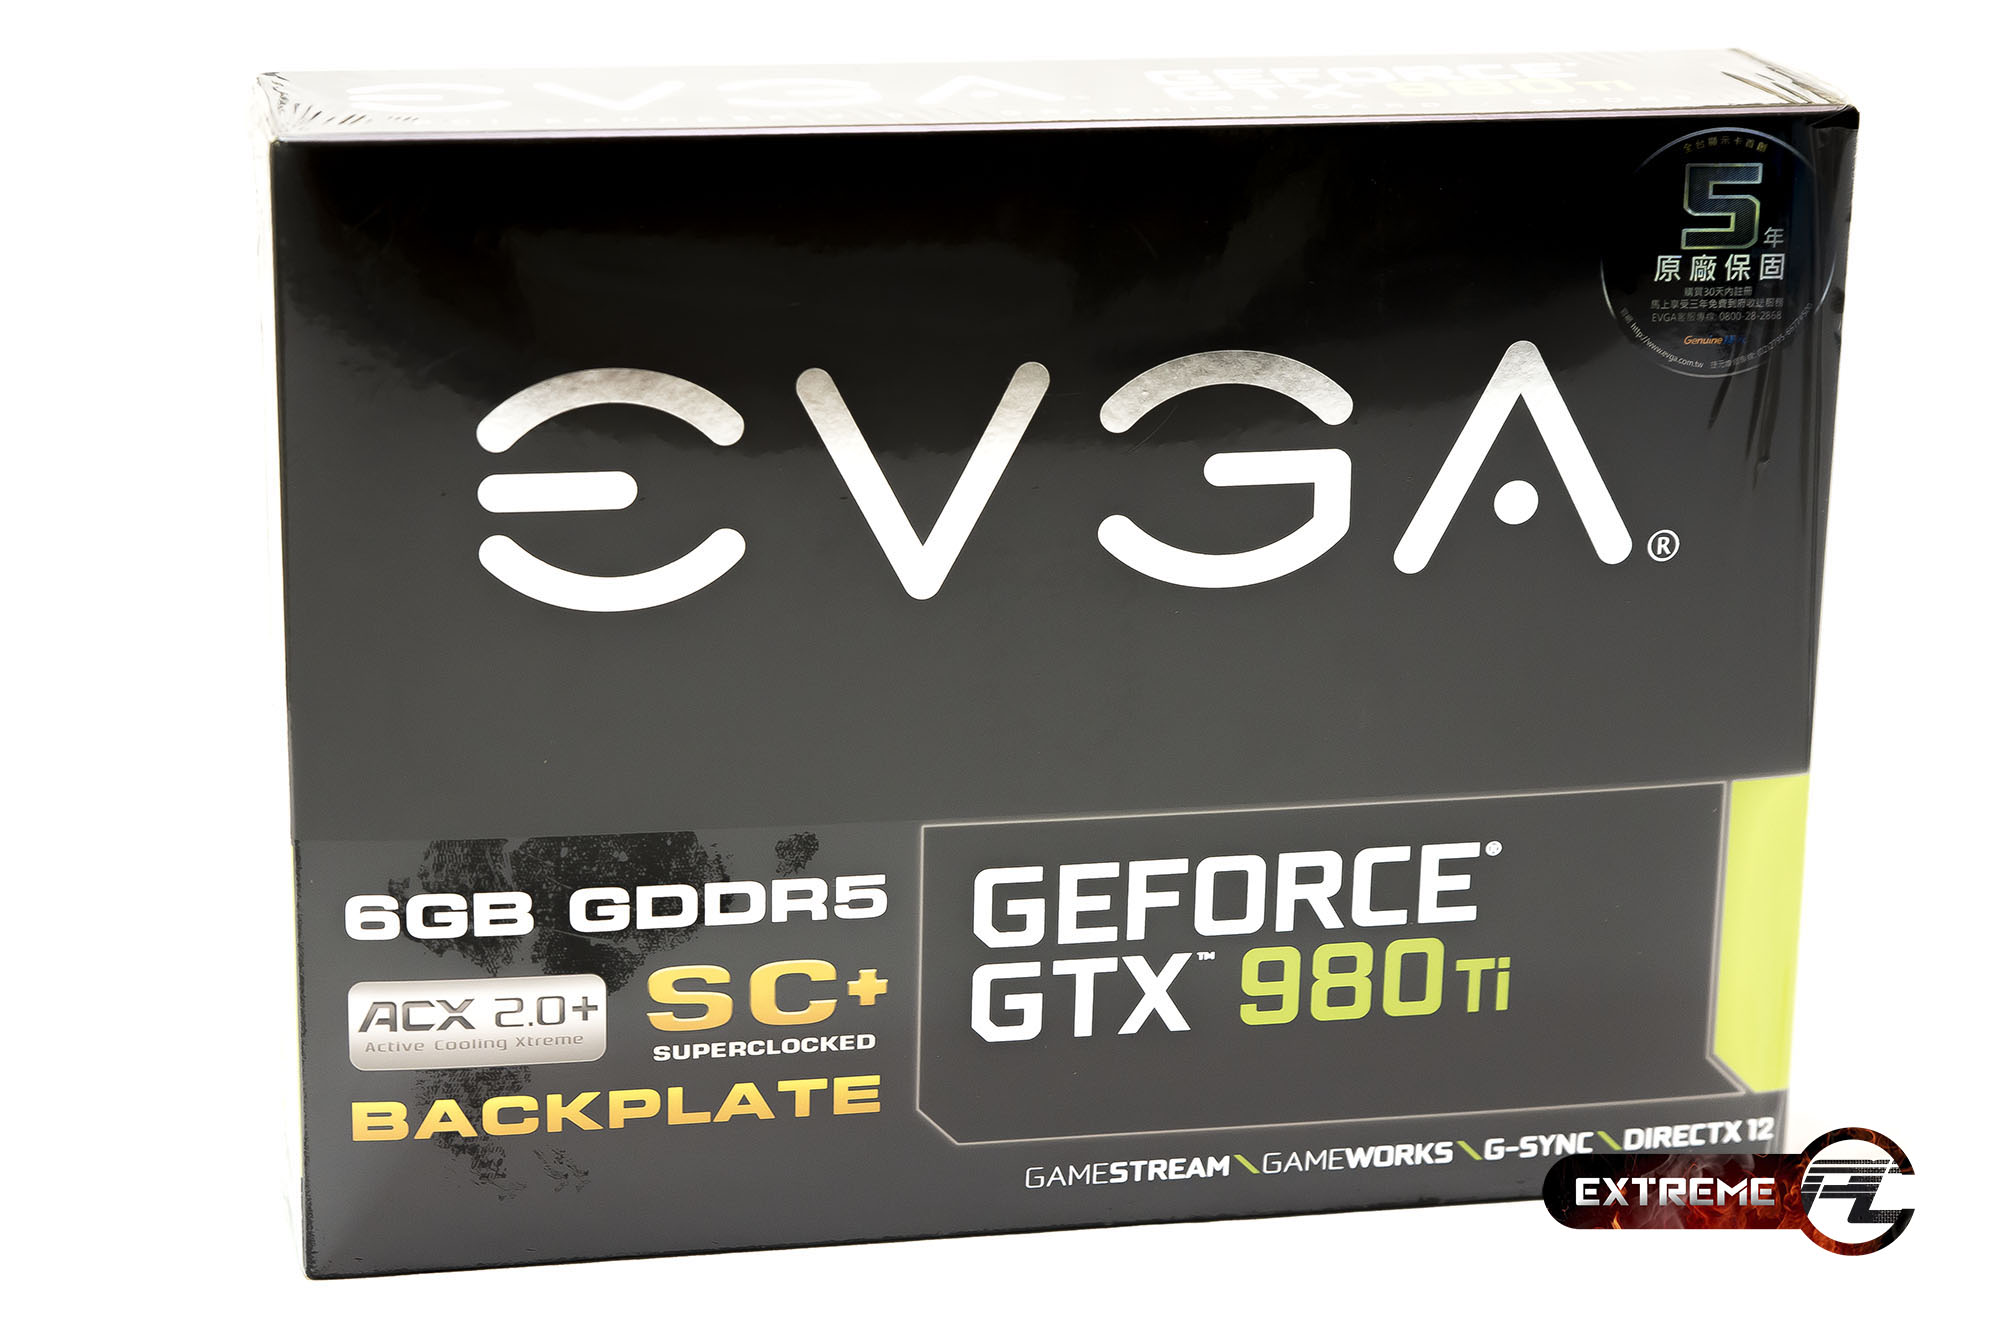 Review: EVGA GEFORCE GTX 980TI SUPERCLOCKED ความแรงที่ตามหา